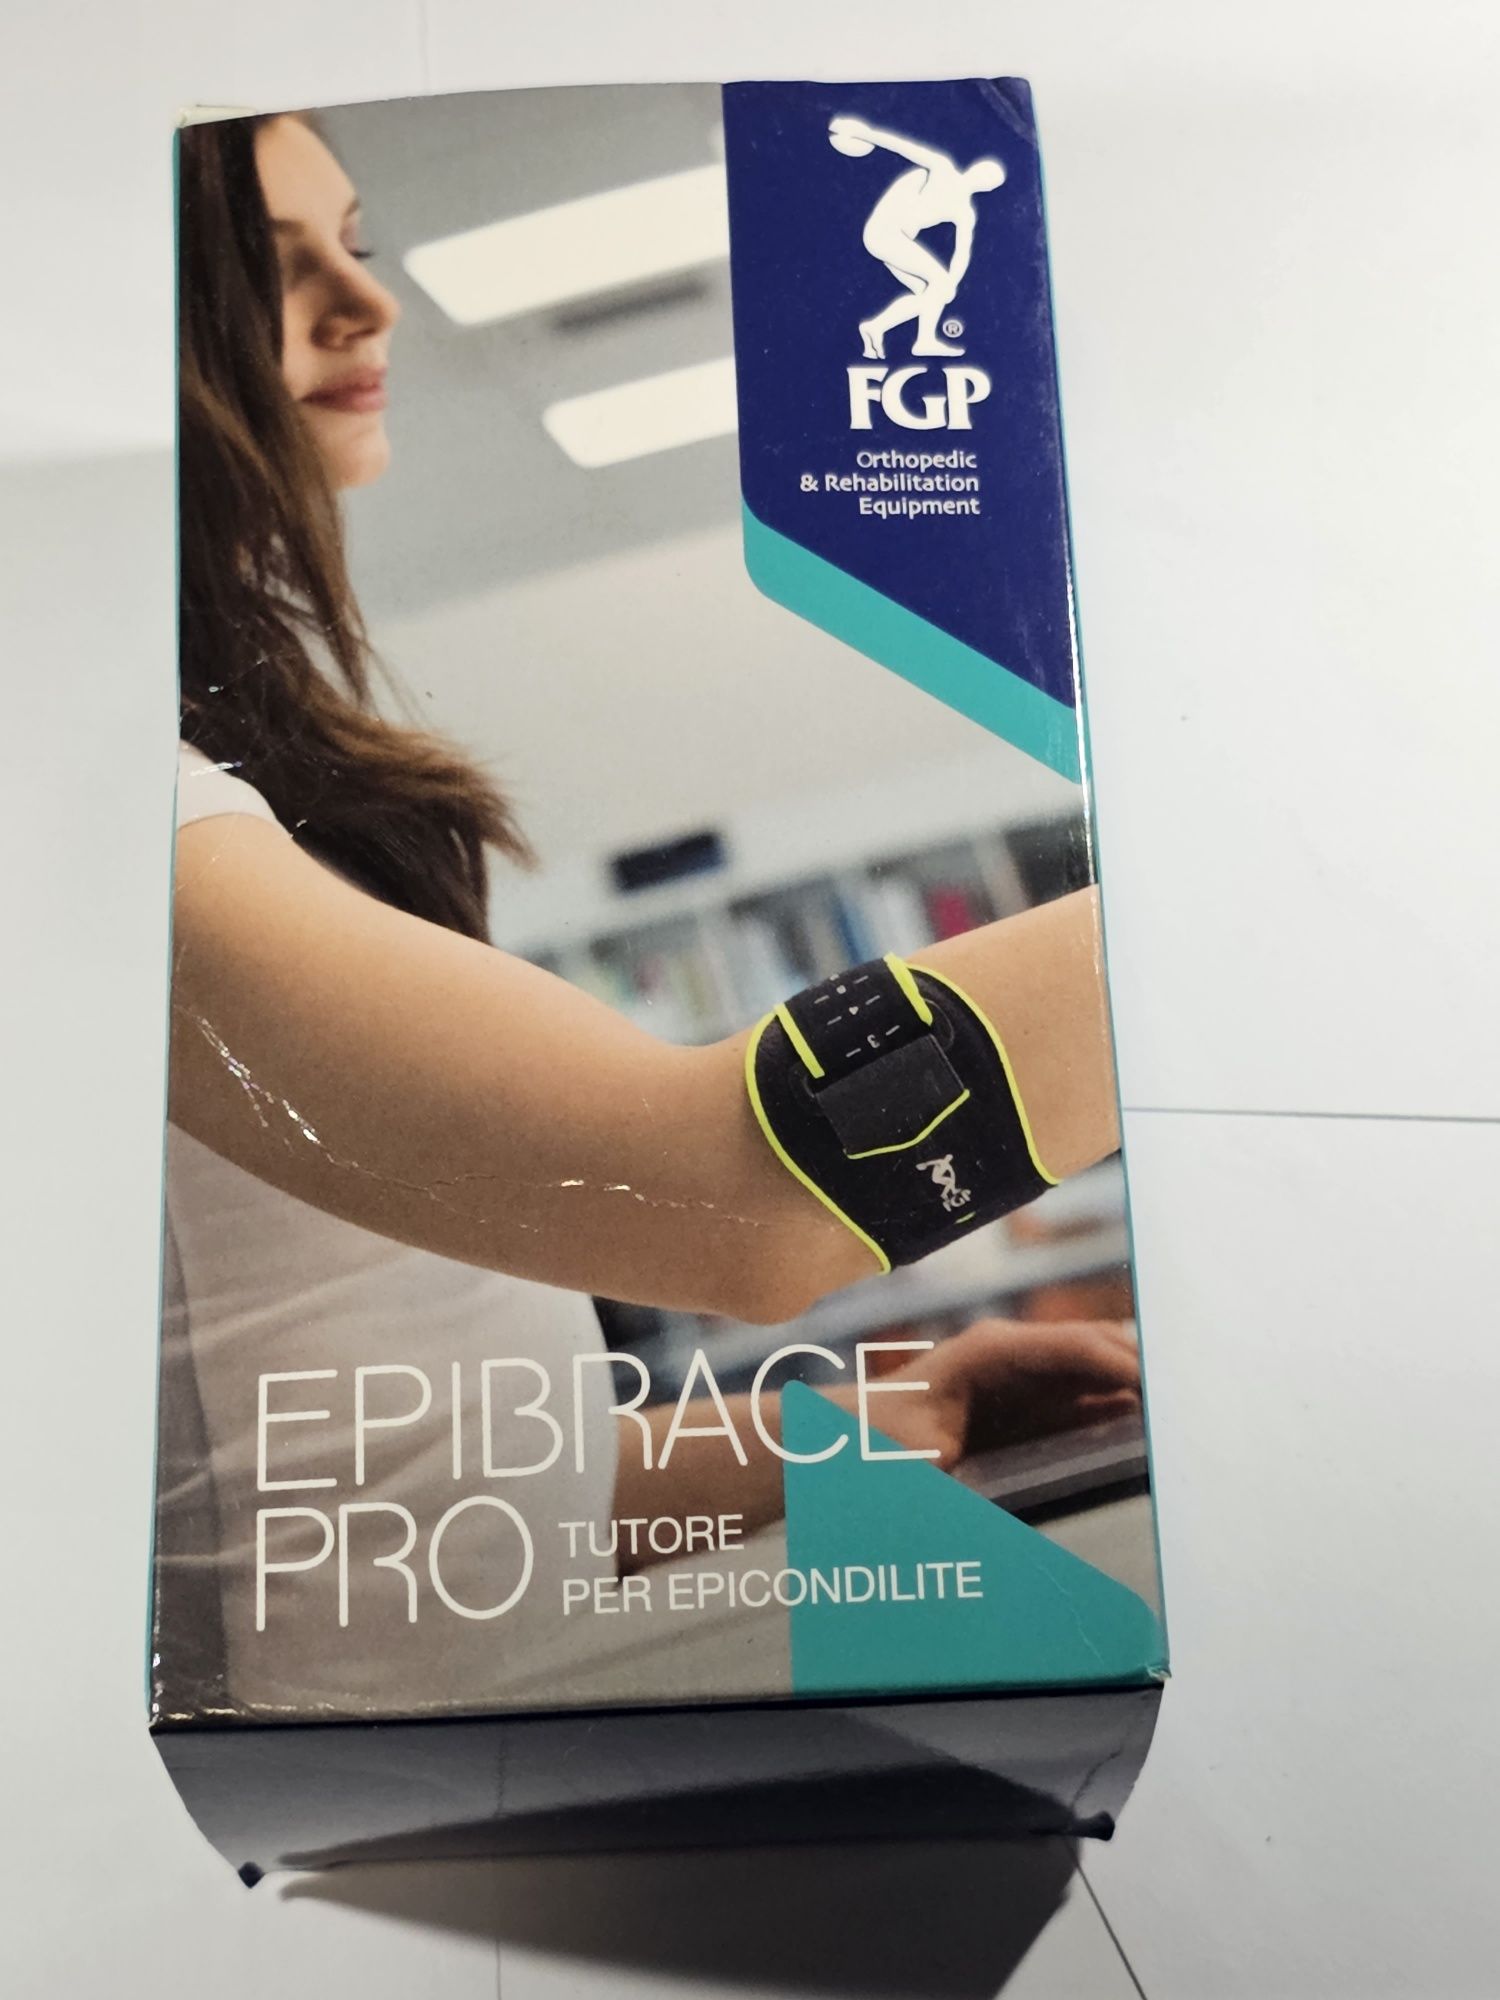 EPIBRACE PRO pentru epicondilita si epitrohleita
APARAT PENTRU EPICOND